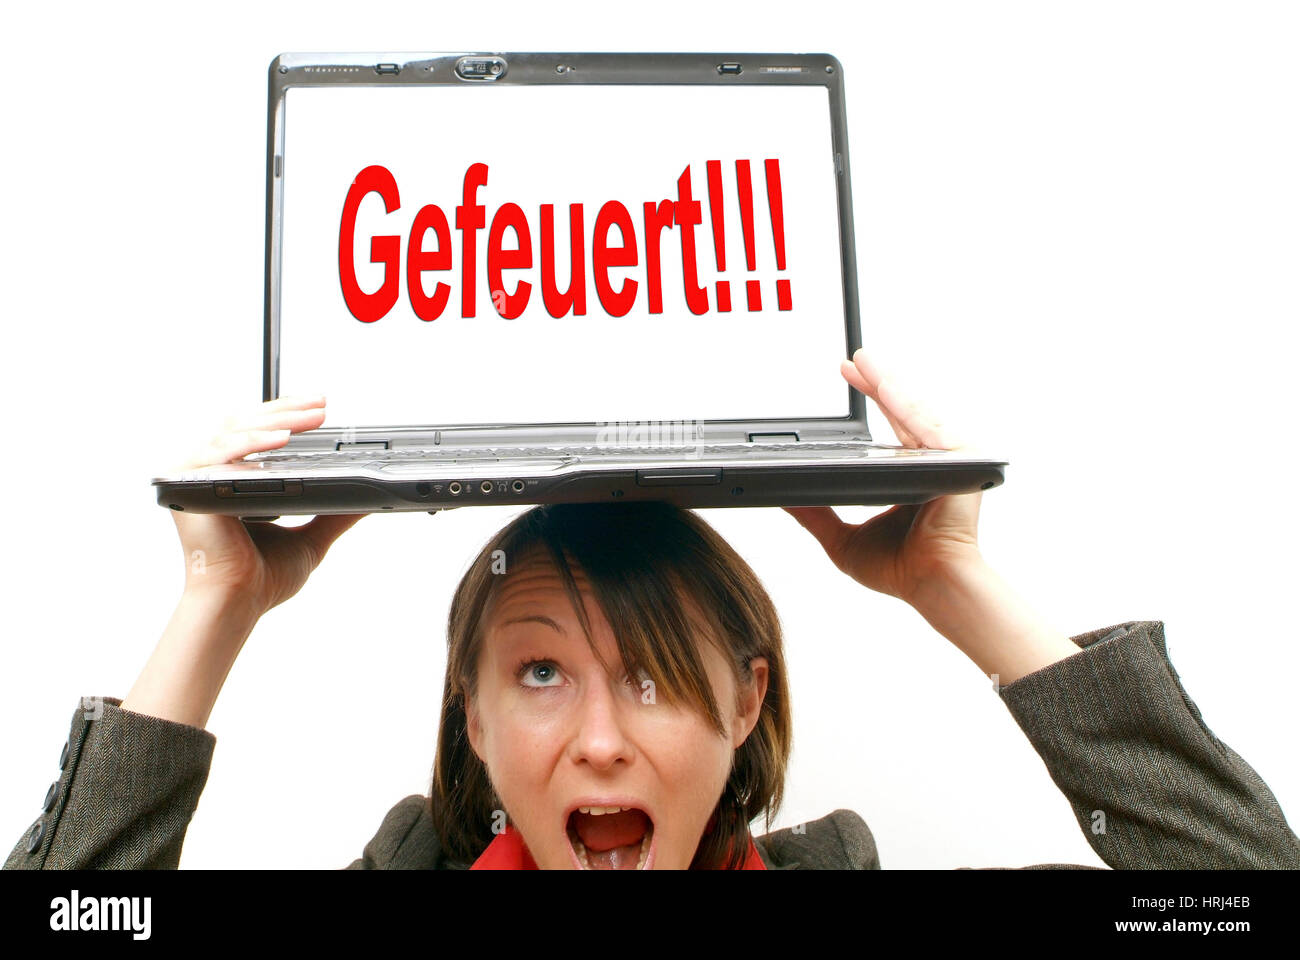 Gesch?ftsfrau mit Laptop am Kopf, Symbolbild Gefeuert - donna d'affari con computer portatile sulla testa, simbolico per essere saccheggiata Foto Stock